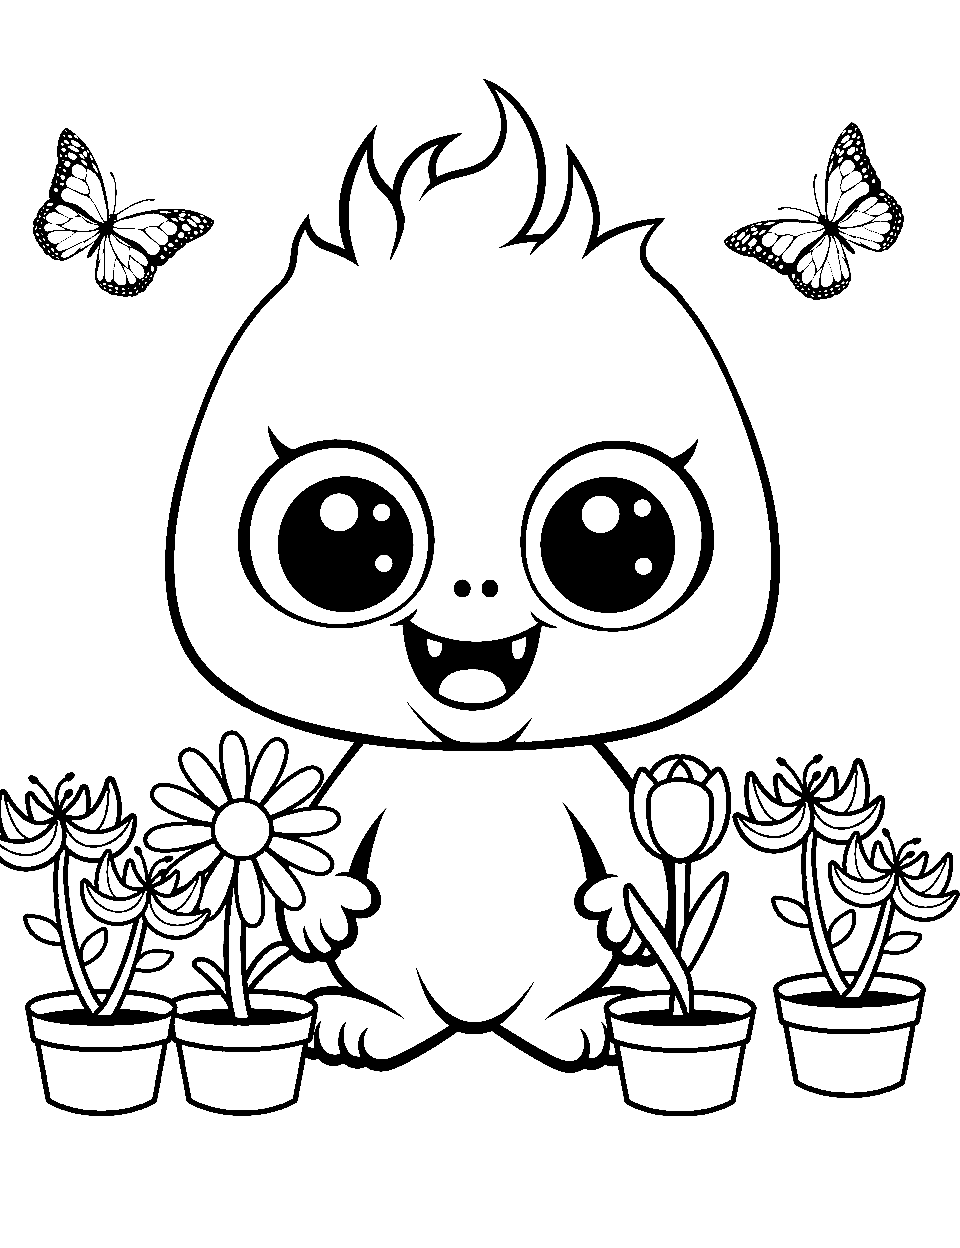 Kawaii Little Monster in a Garden Coloring Page - A small kawaii, cute monster among flowers and butterflies in a garden.